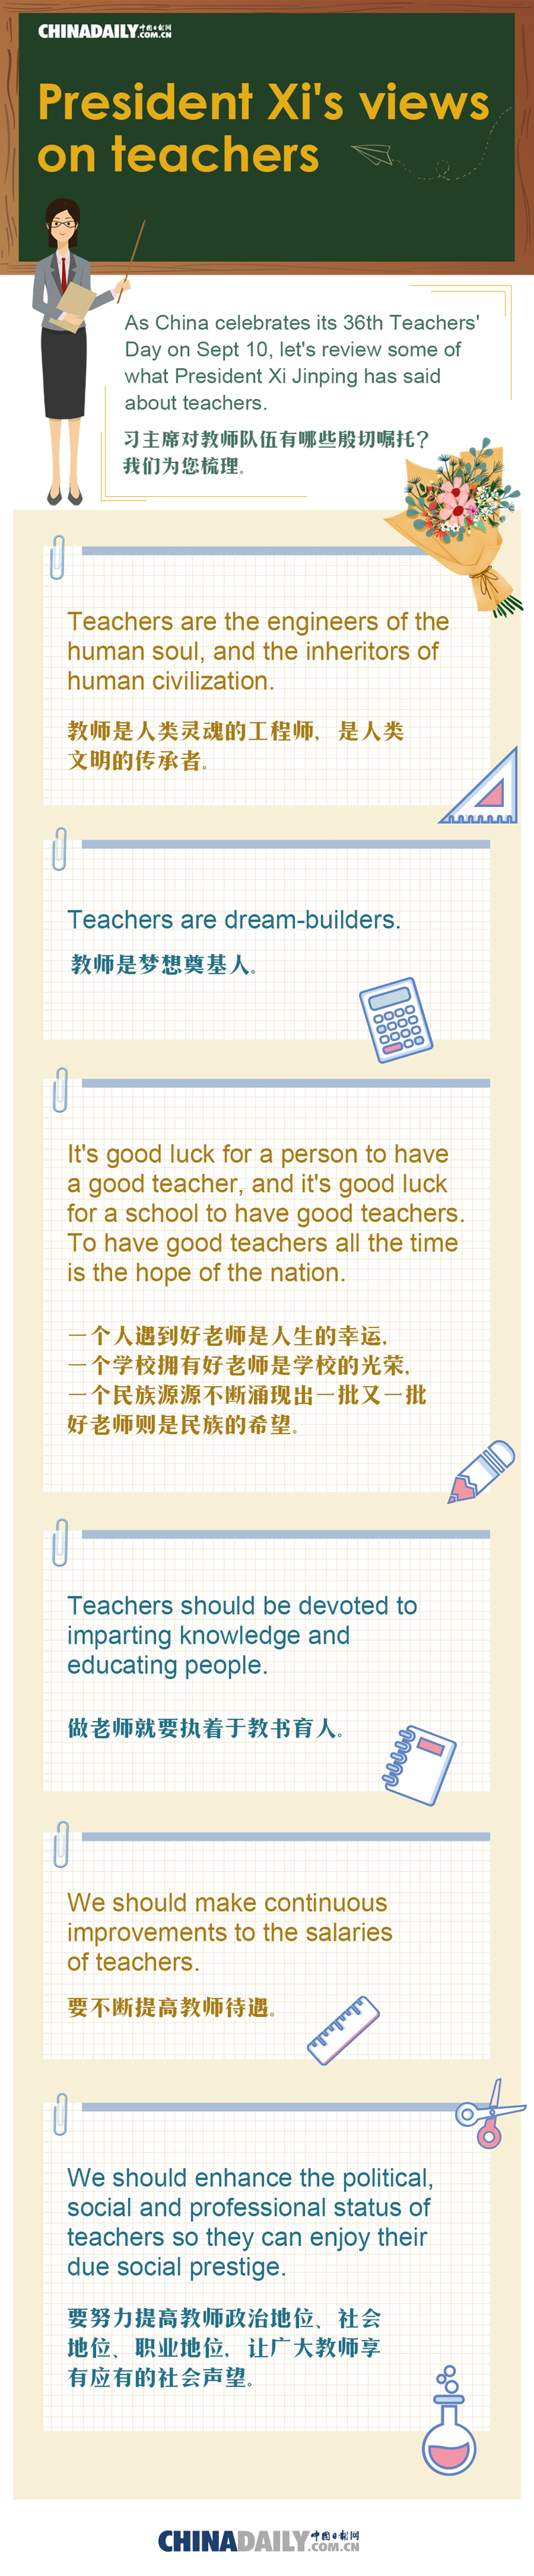 Xi extends Teachers' Day greetings to teachers